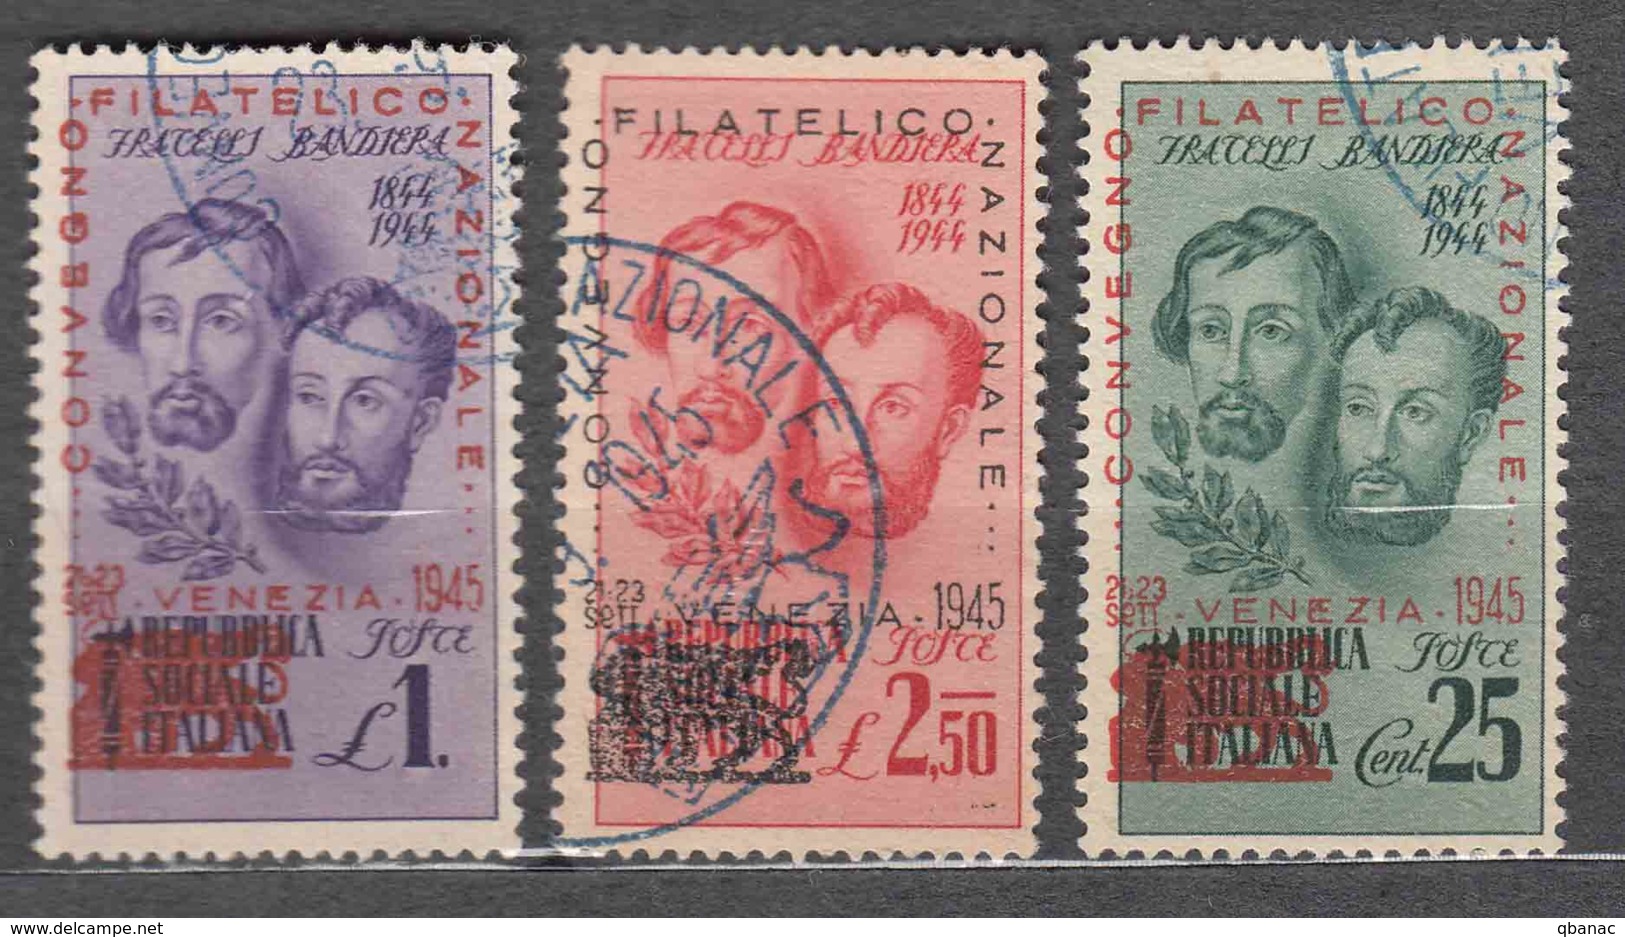 Italy 1945, Philatelic Exibition Venezia Stamps Overprint, Fratelli Bandiera, Used - Gebraucht